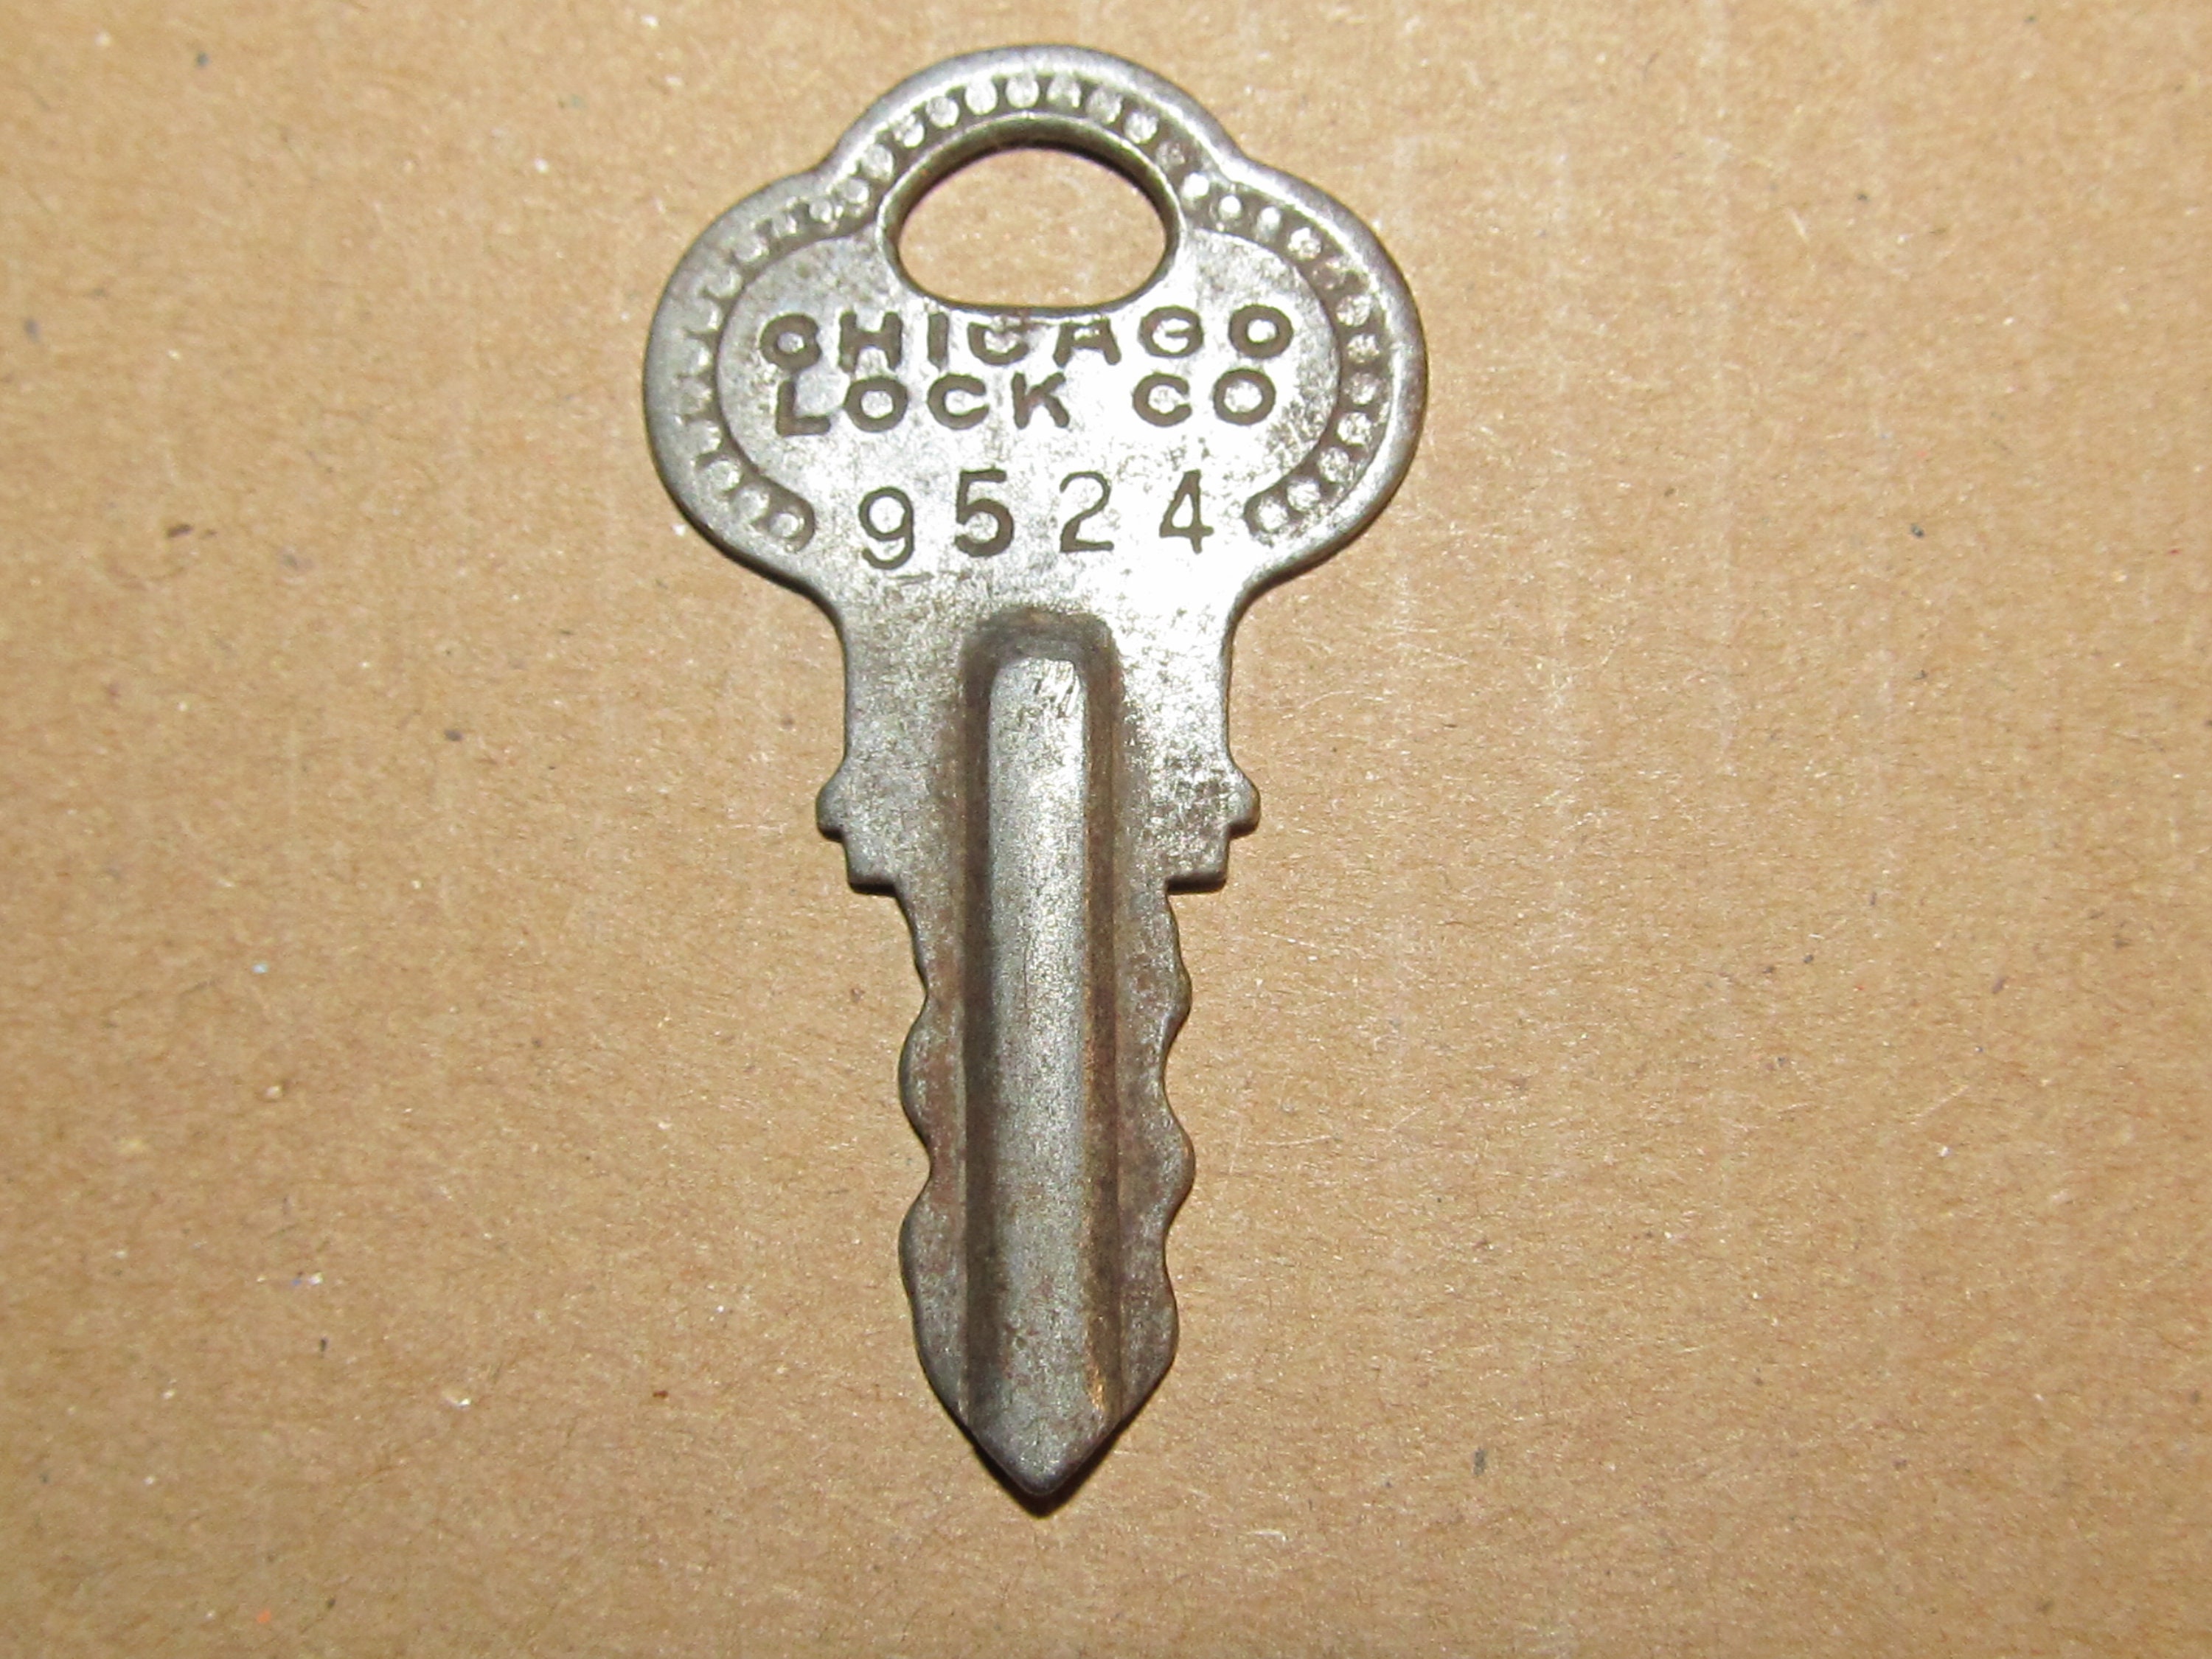 Vintage Chicago Lock Co. File Cabinet Lock w/ 2 Keys